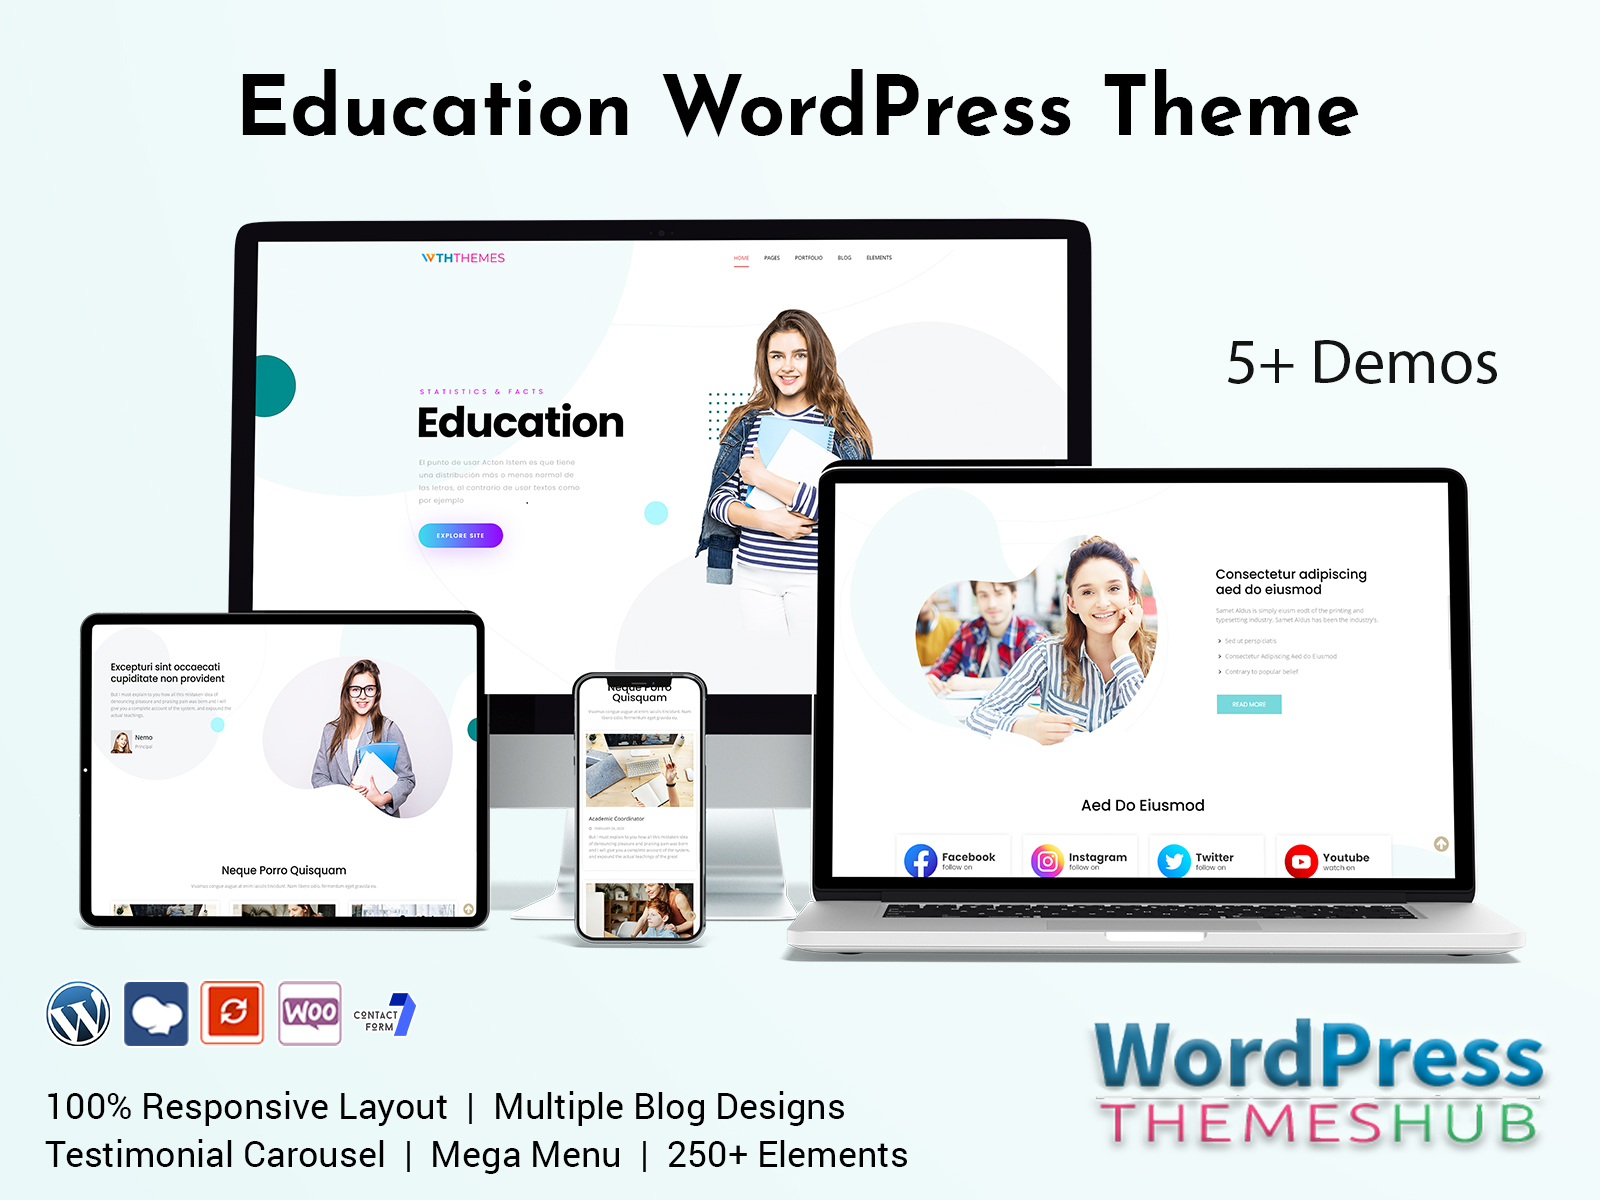 Education WordPress Theme To Make Schools & Education Website